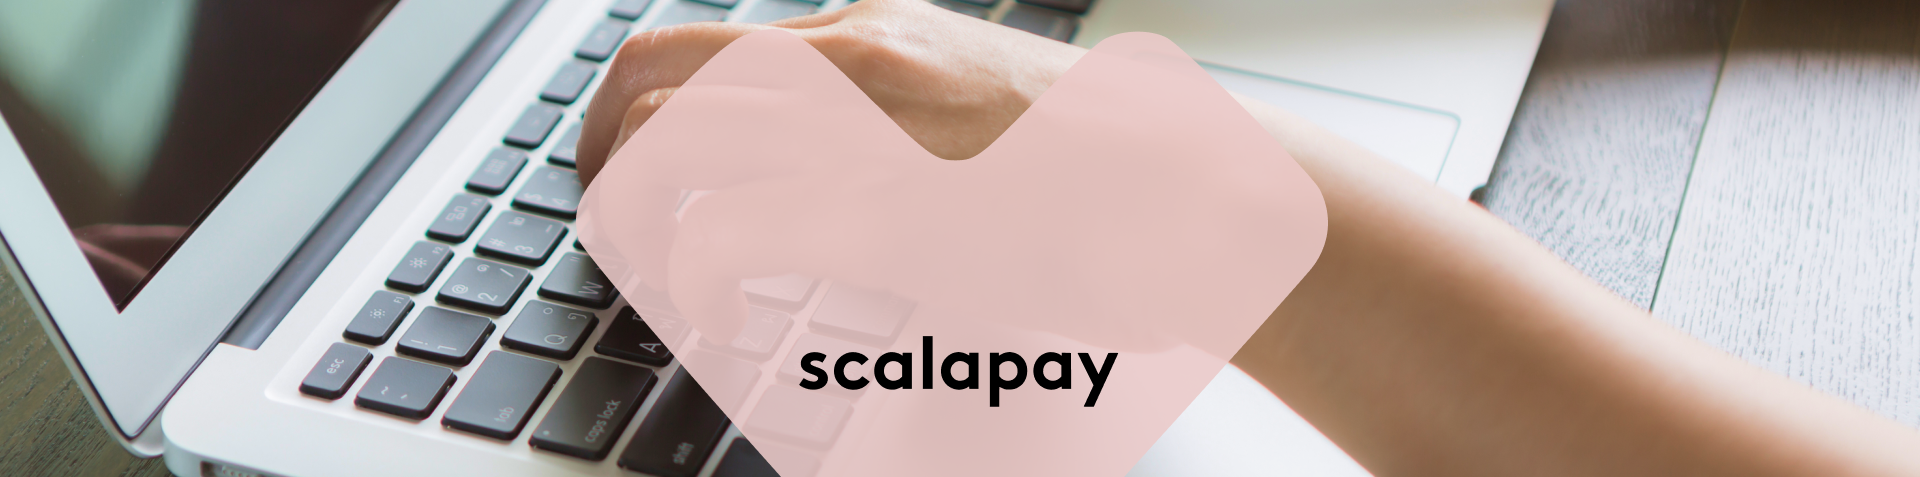 Bcame annuncia la nuova partnership con Scalapay